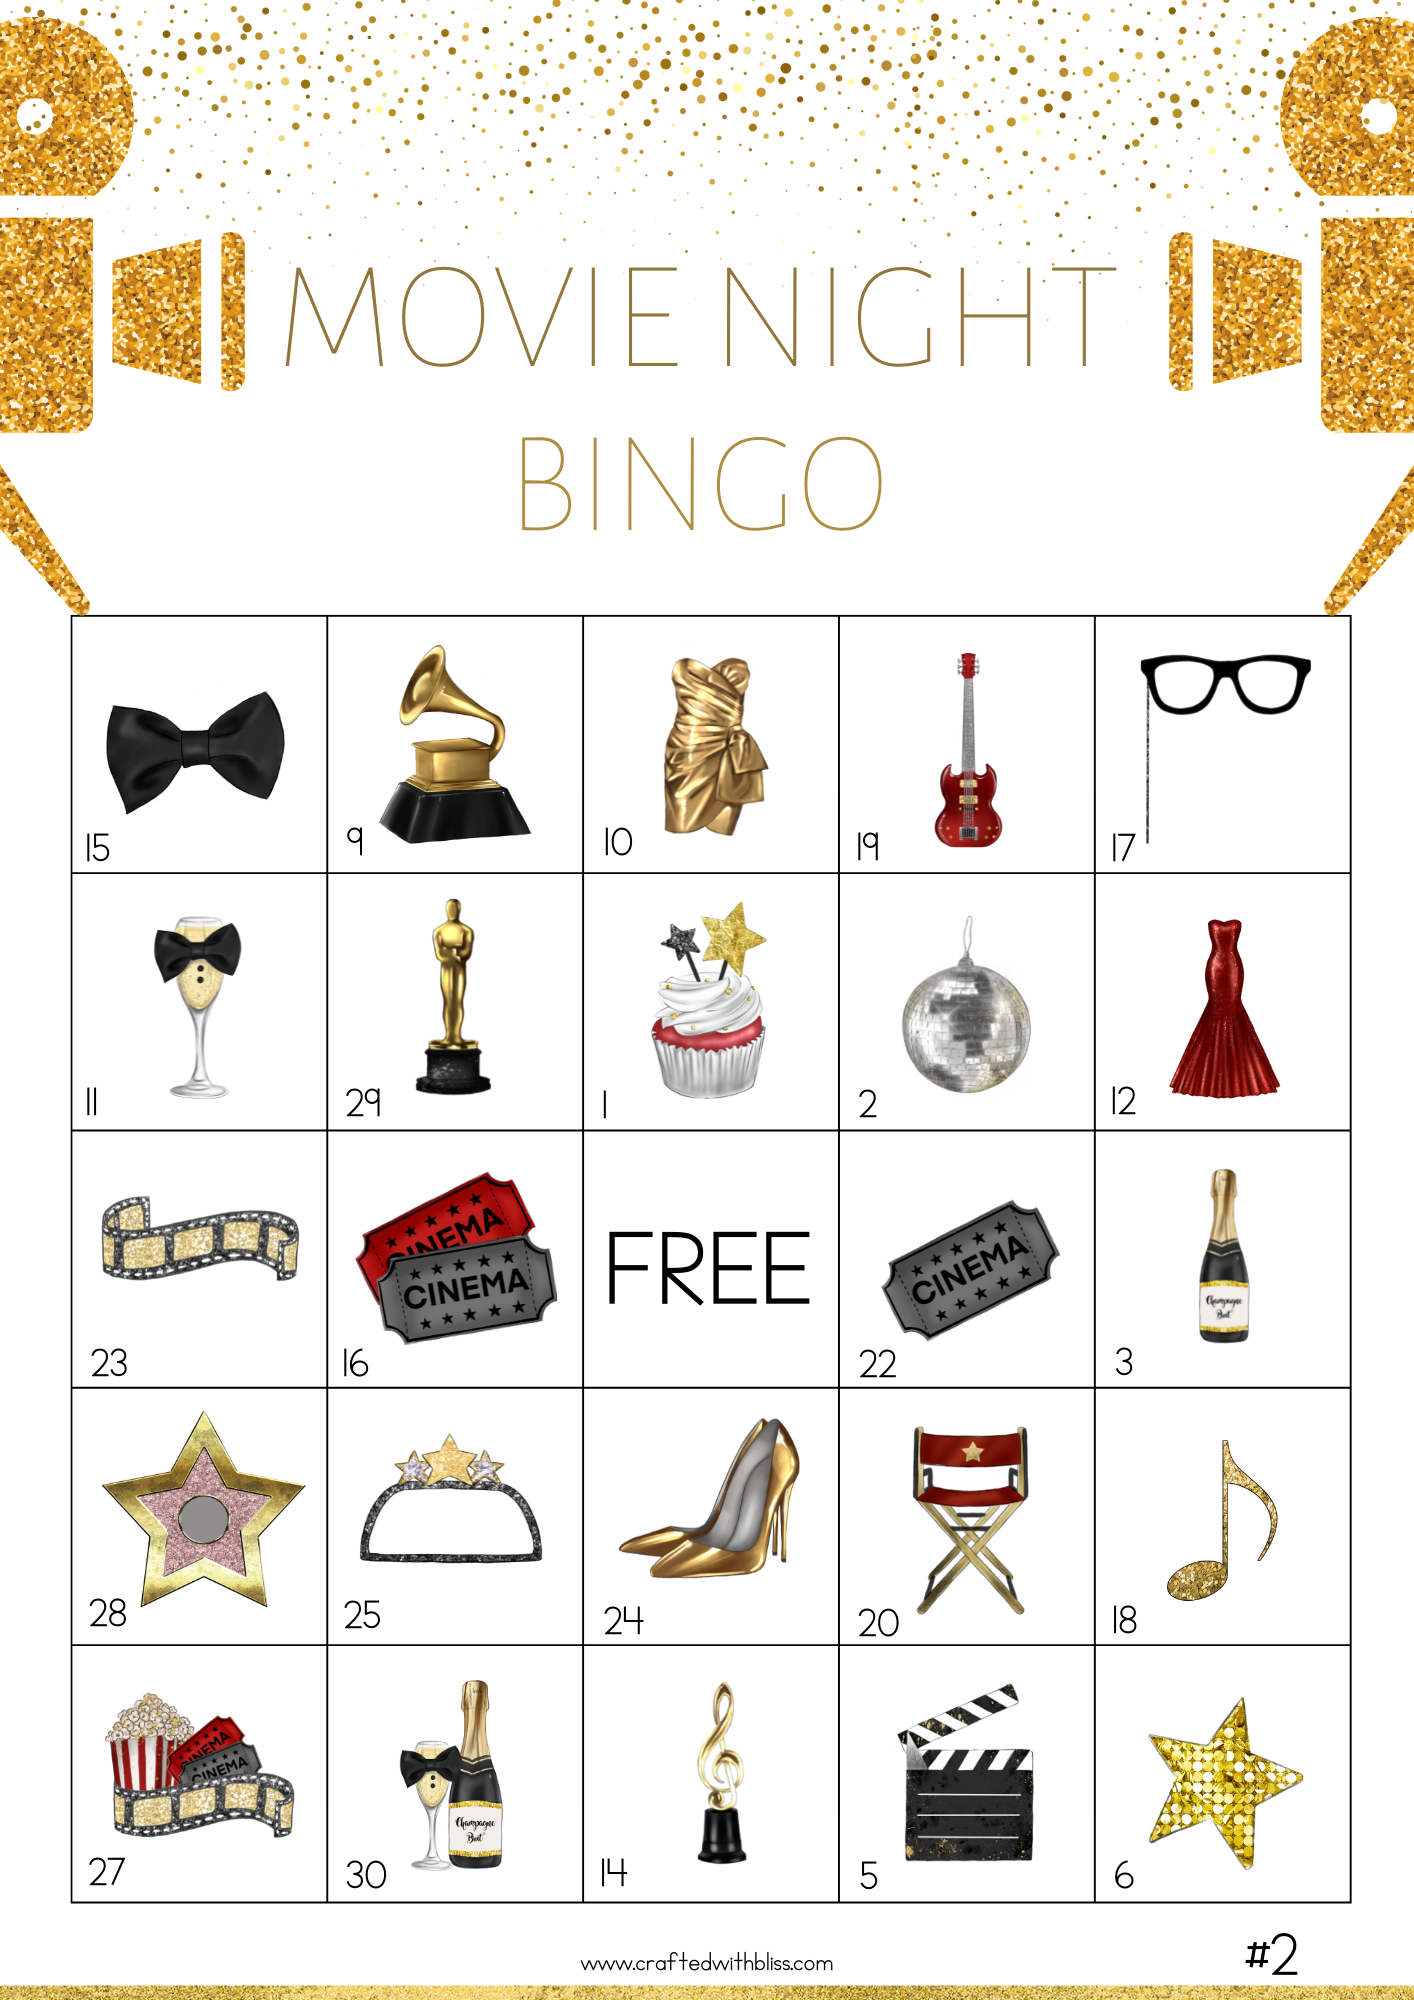 50 Movie Night Bingo Cards (5x5) – CraftedwithBliss